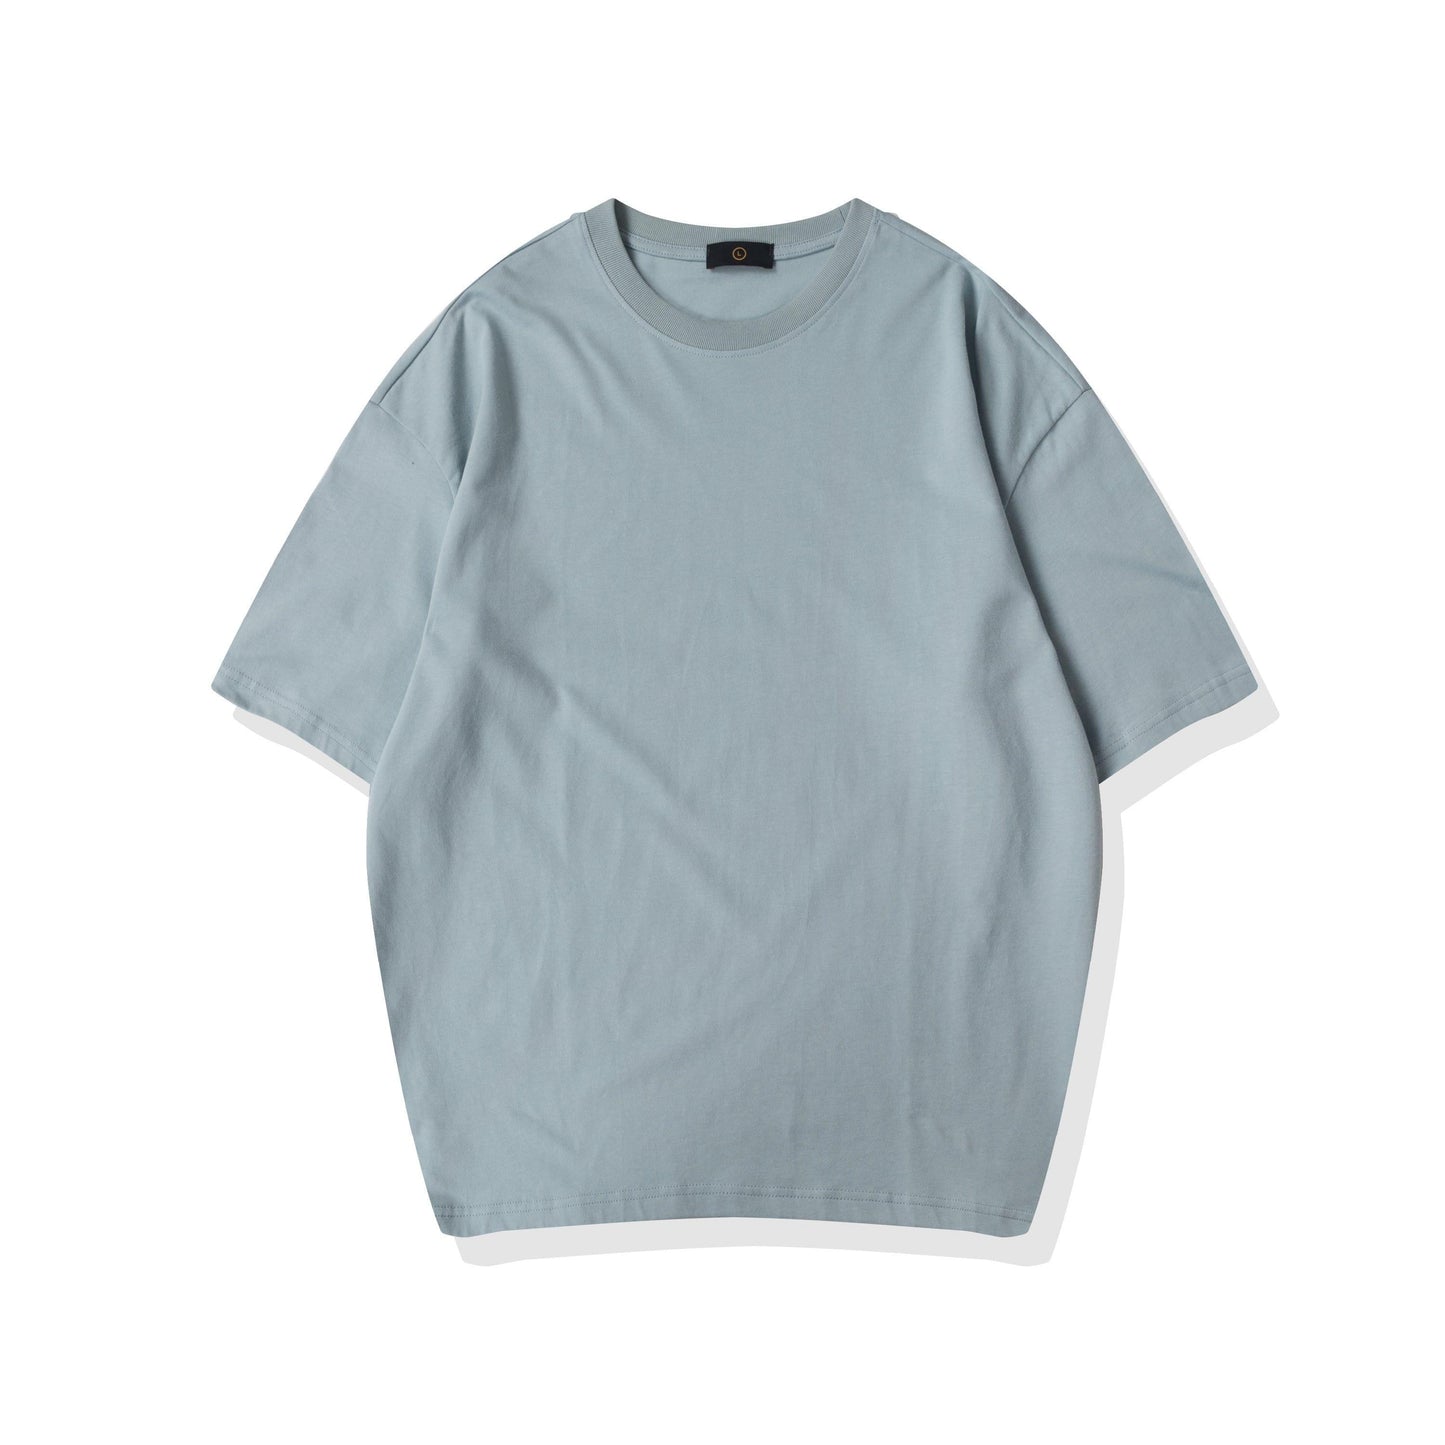 ezy2find T Shirt Light blue / XL Solid color short-sleeved T-shirt bottoming shirt